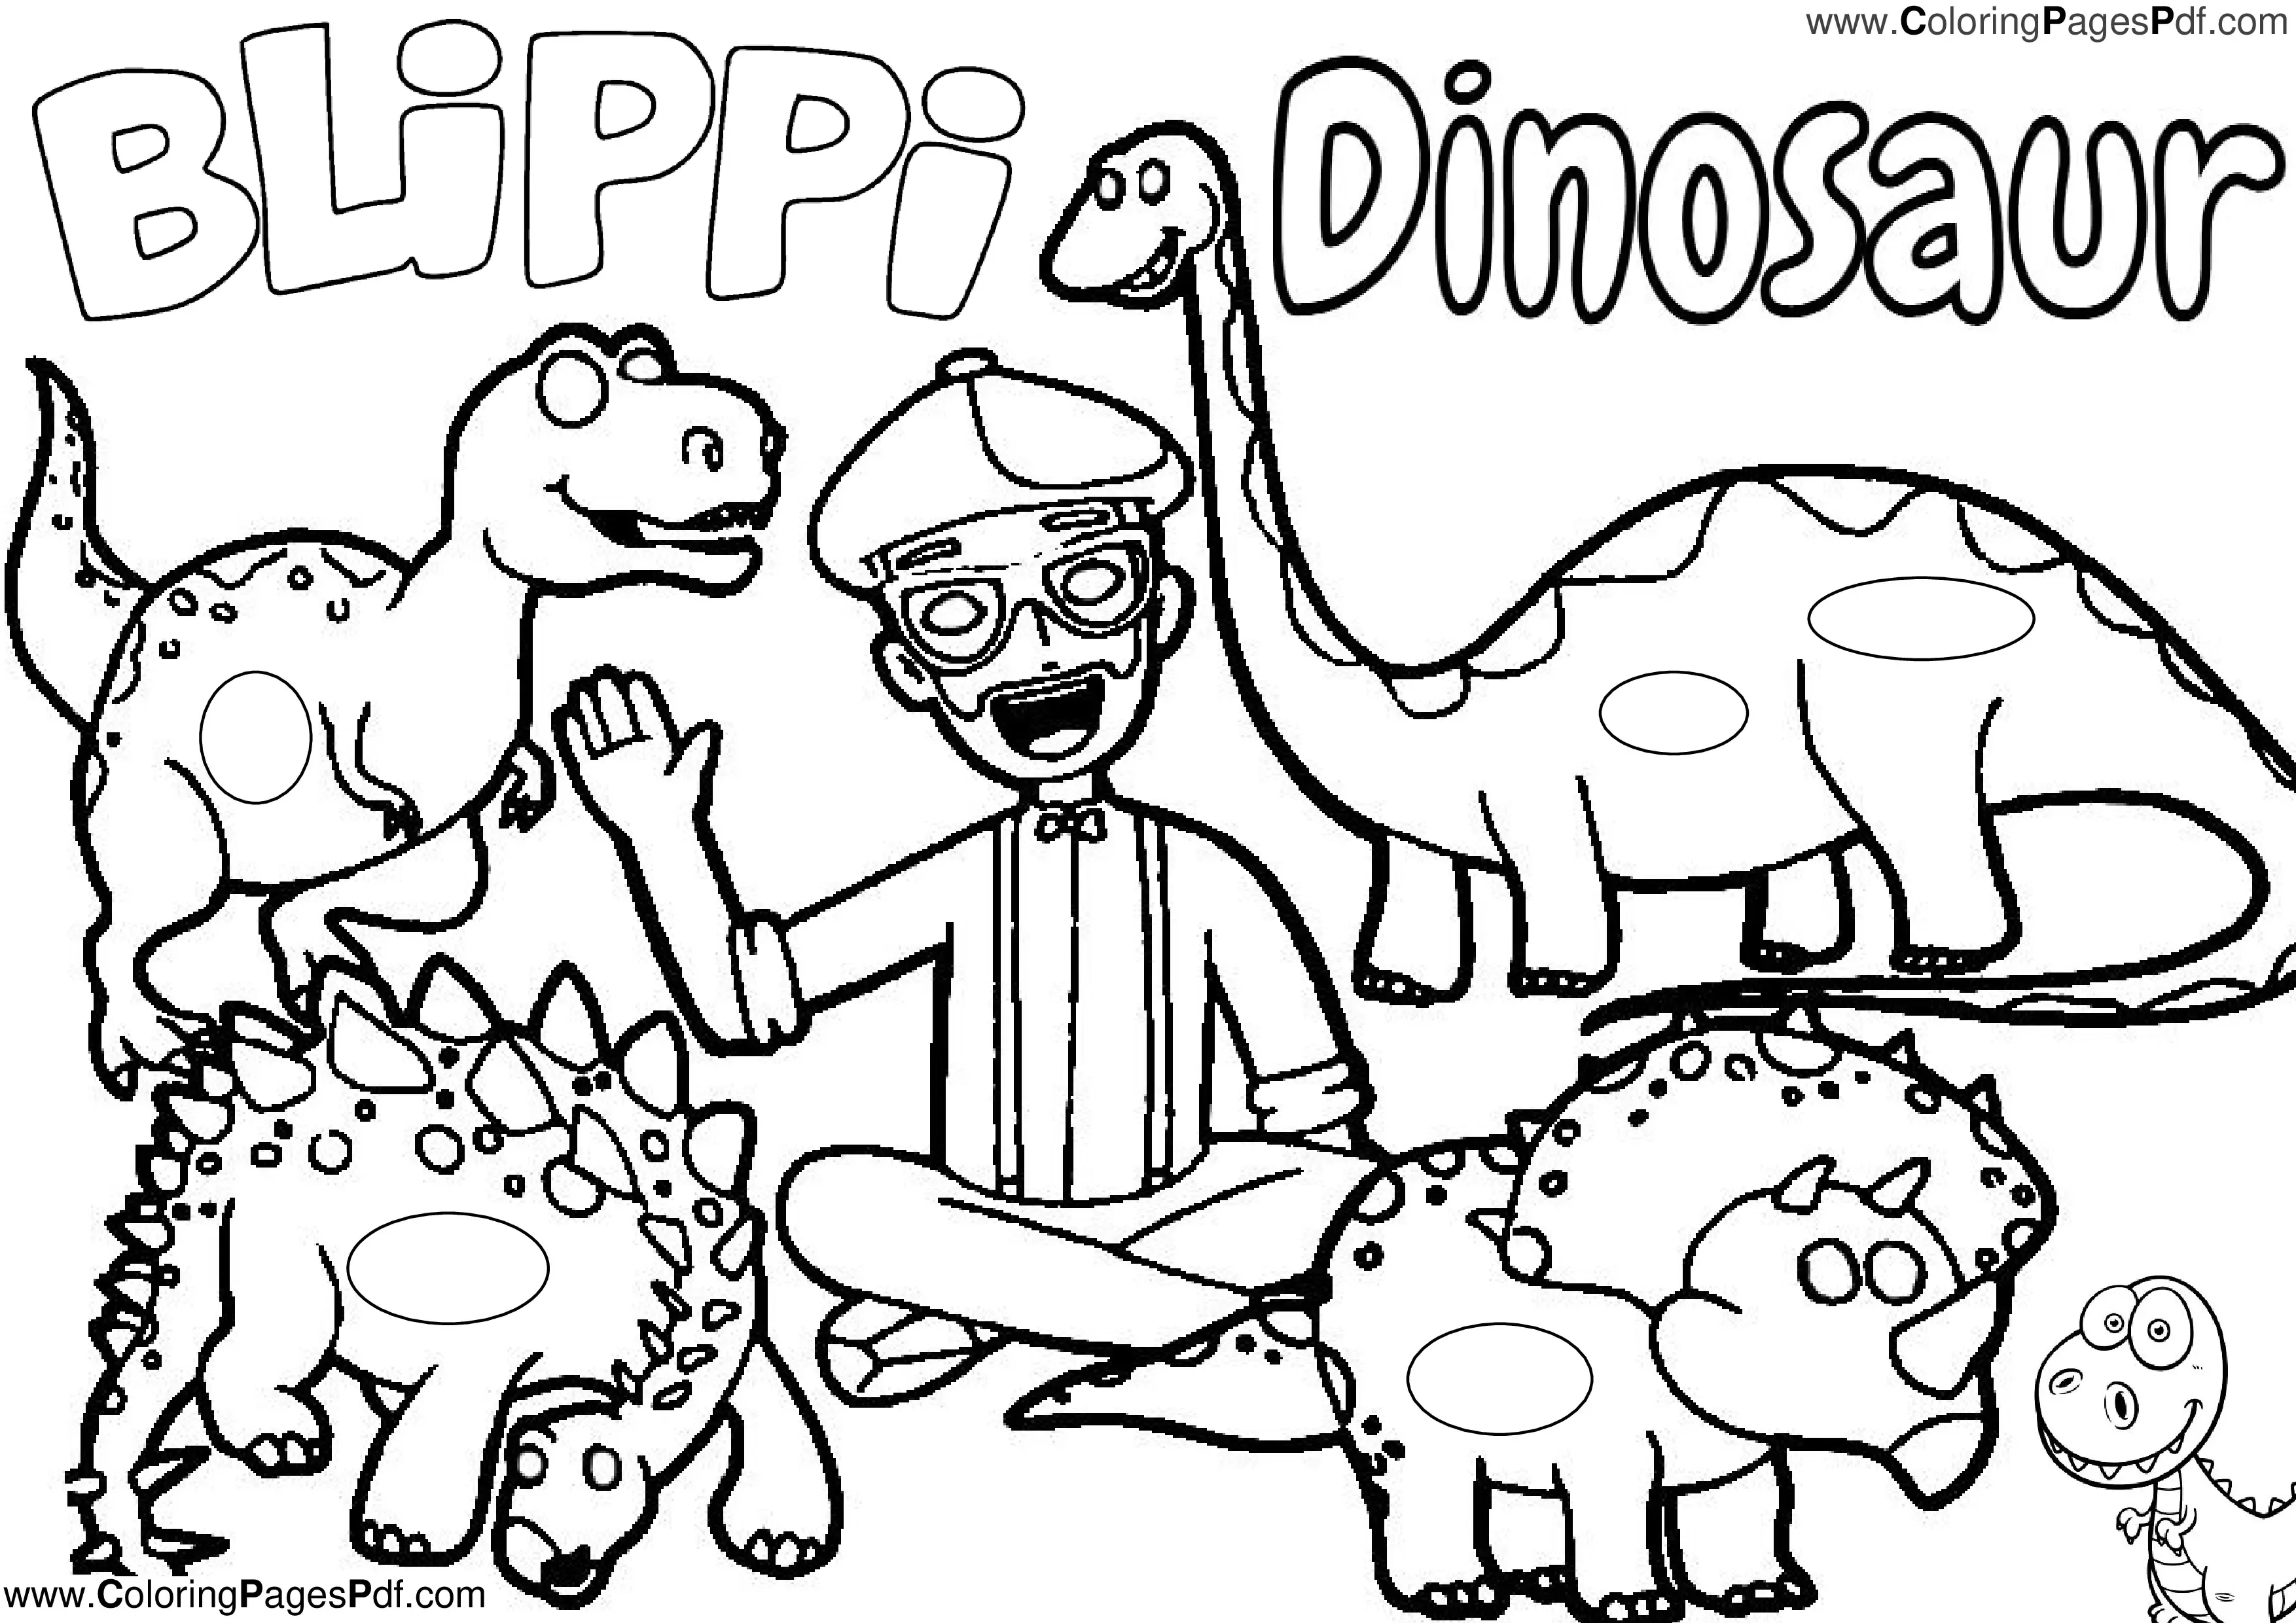 Blippi dinosaur coloring page